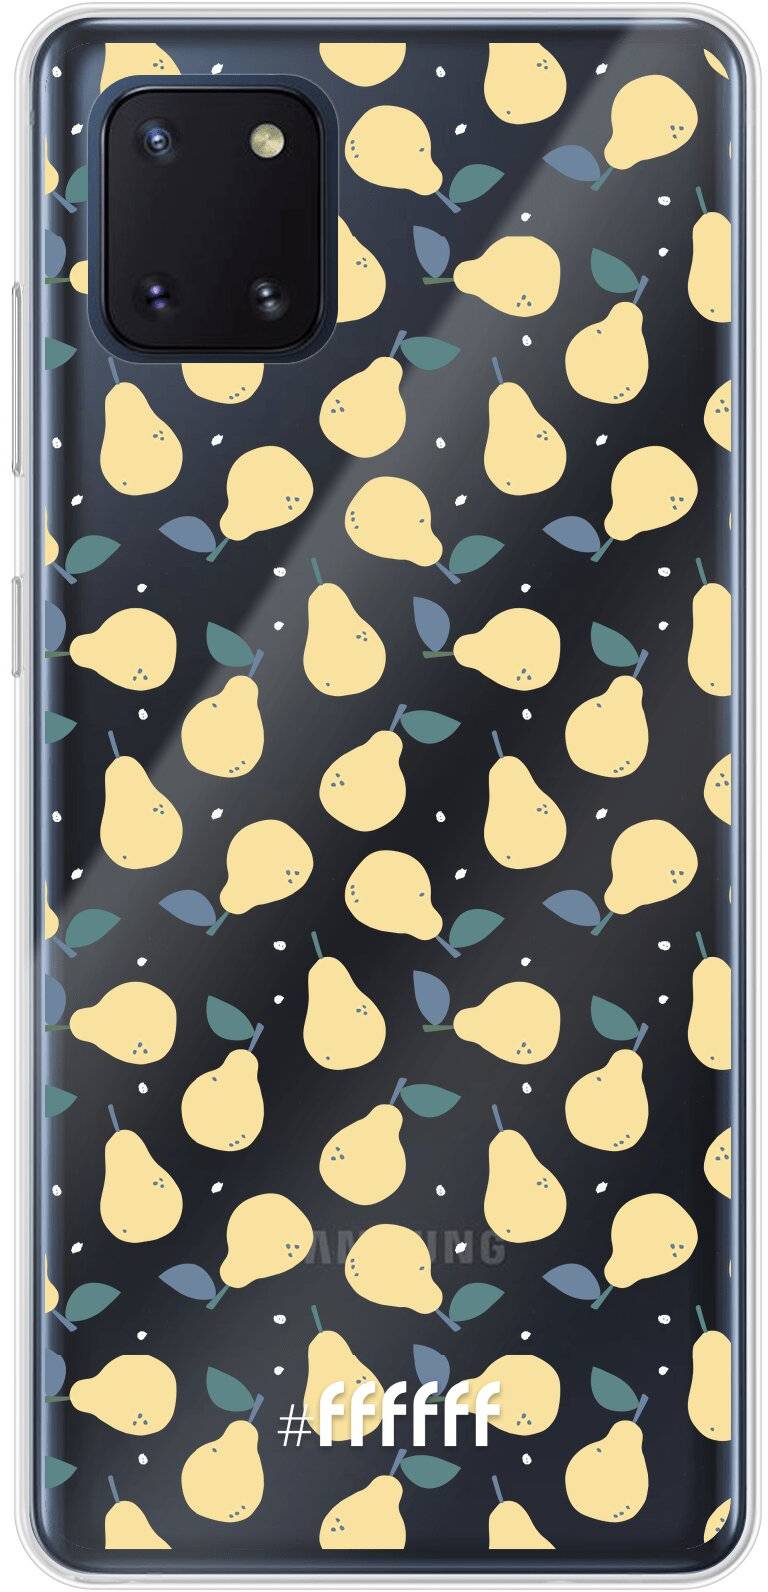 Pears Galaxy Note 10 Lite